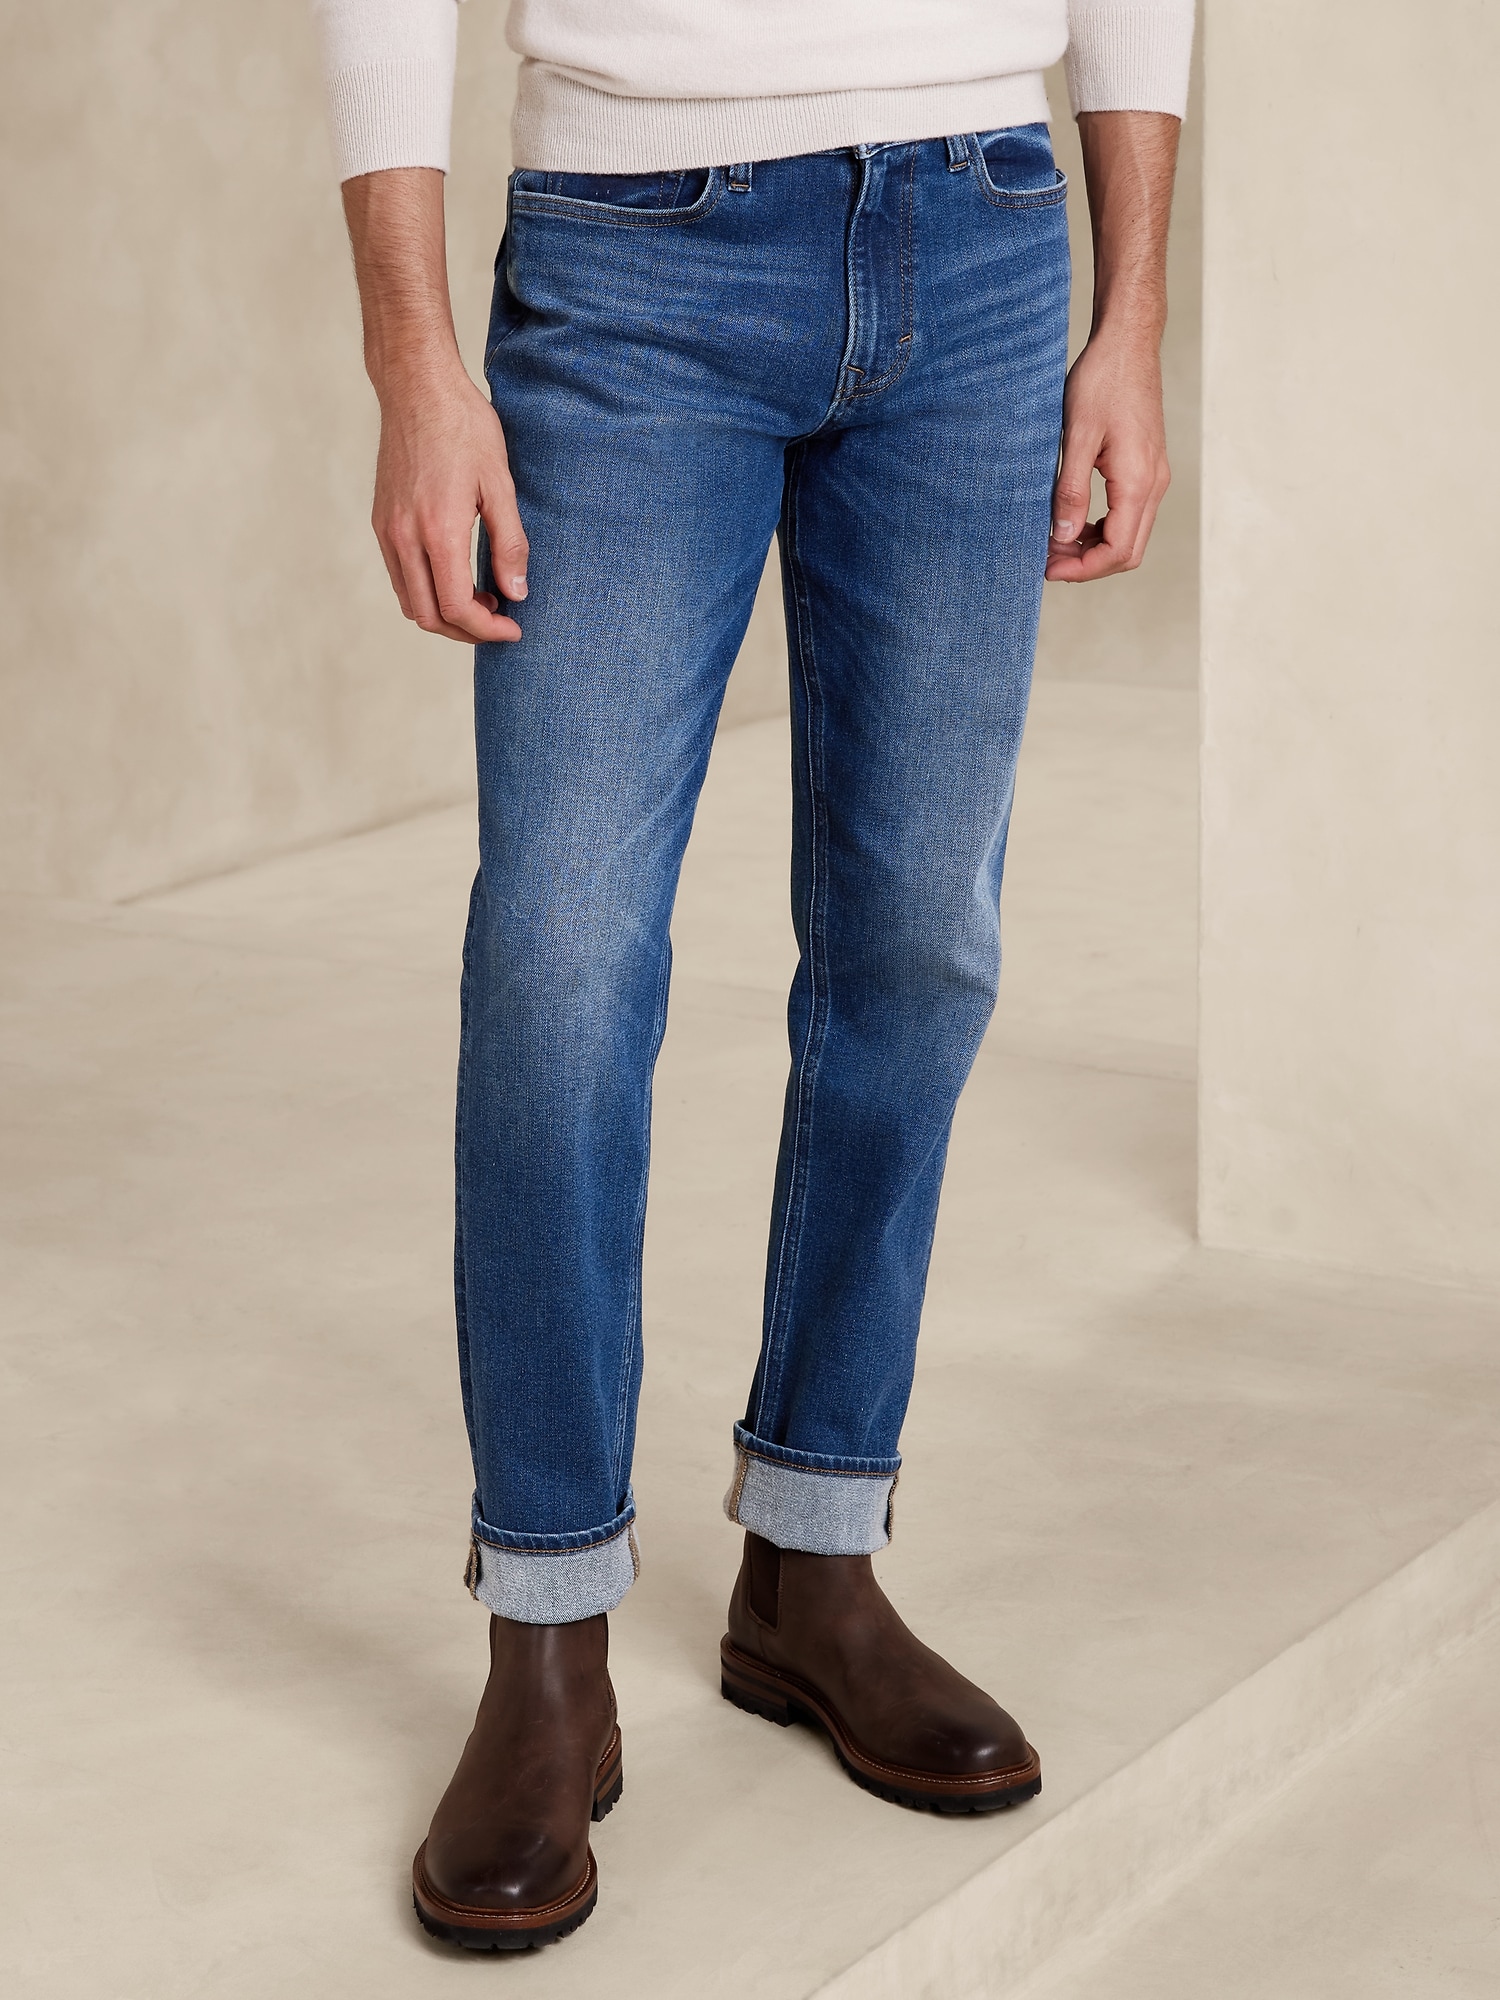 Hollister Jeans for Men, Online Sale up to 57% off